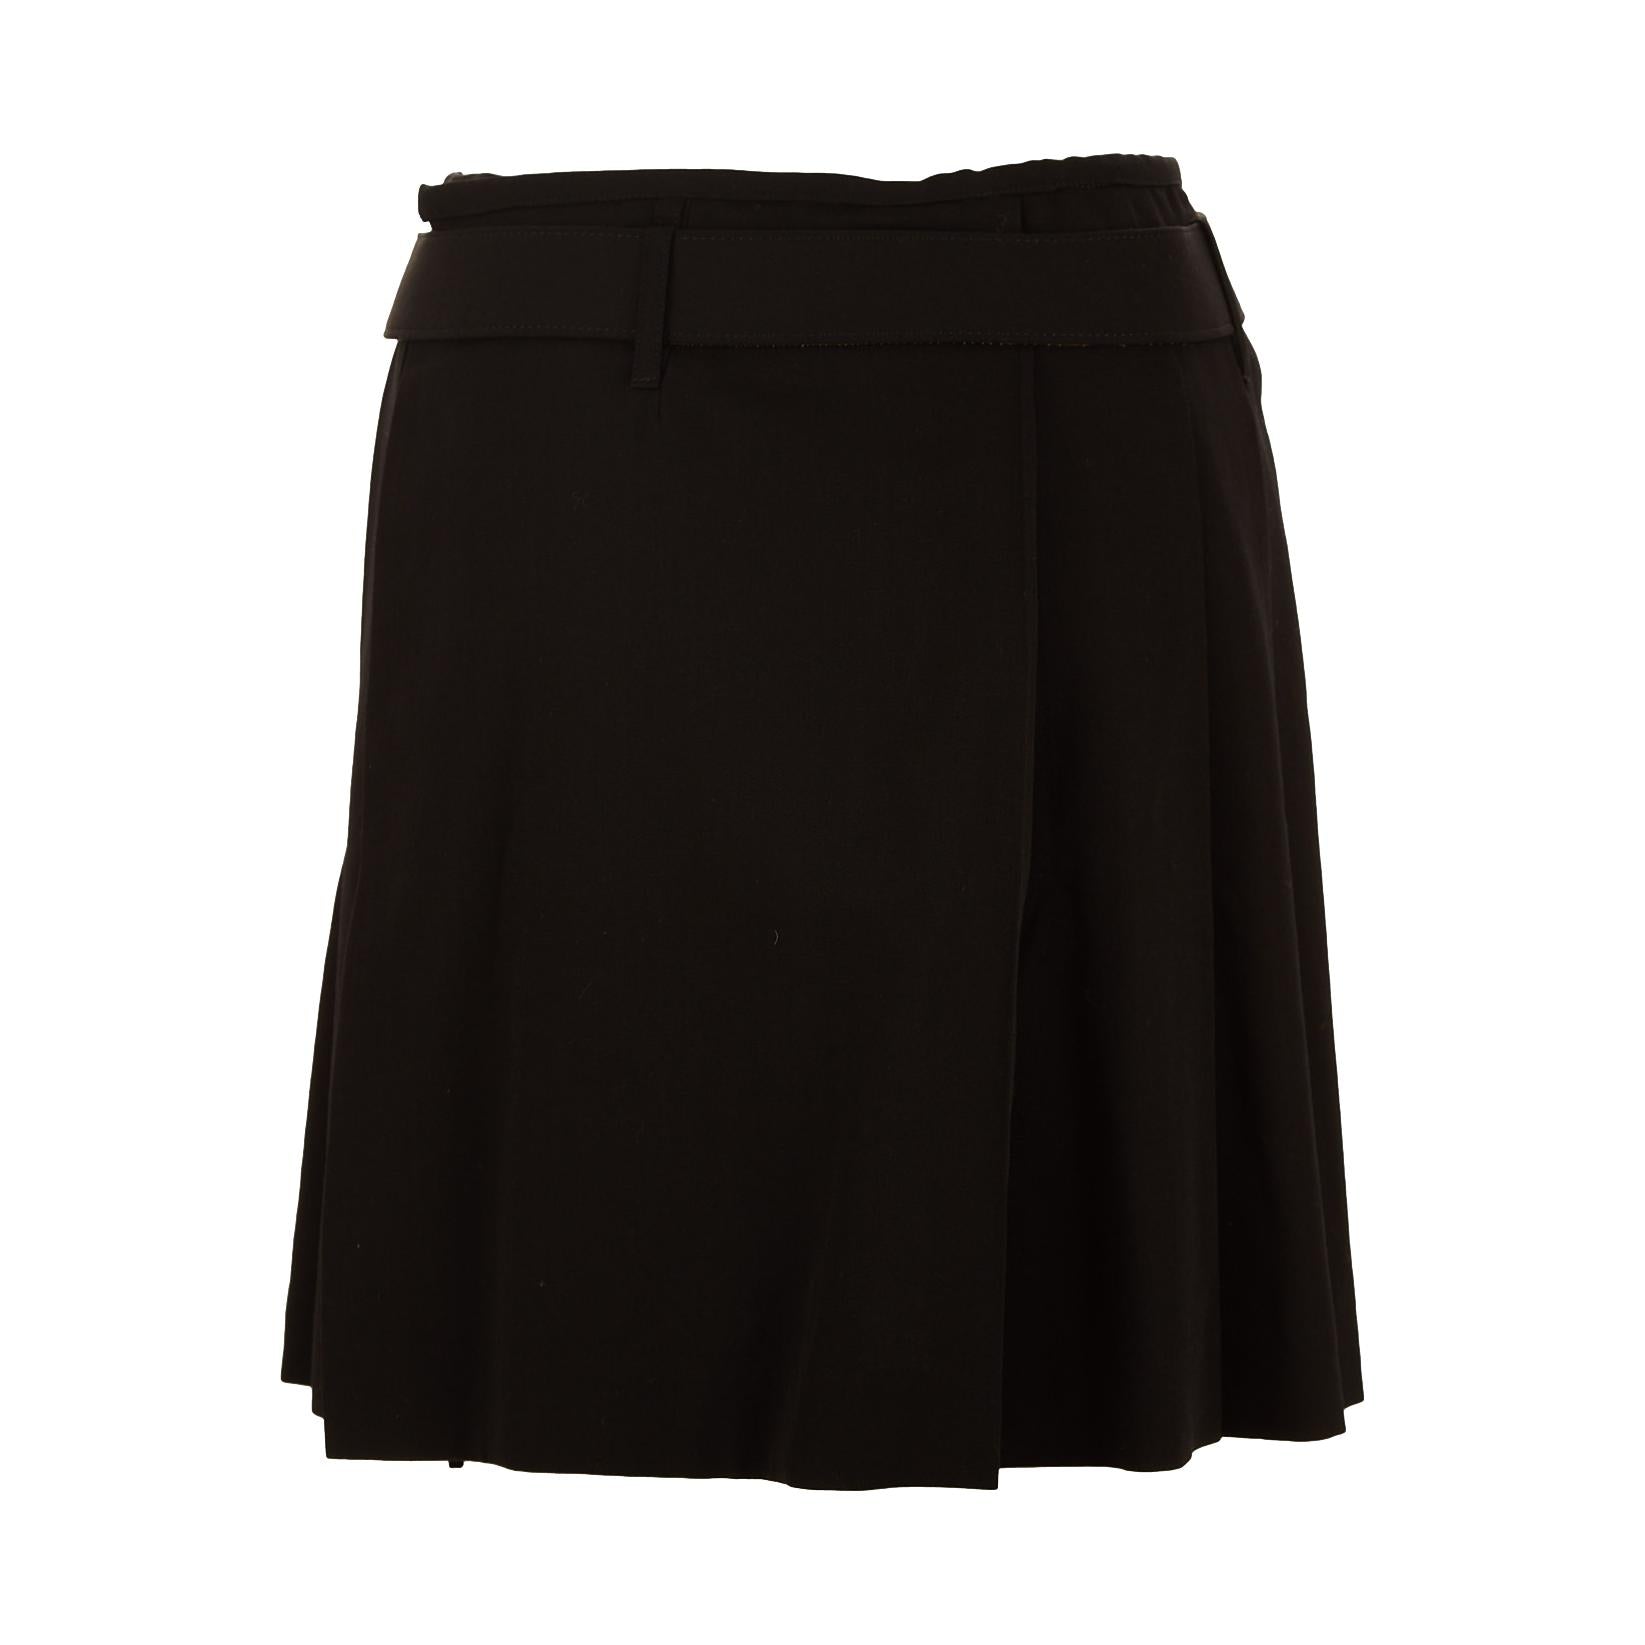 Jean Paul Gaultier Black Belted Skirt